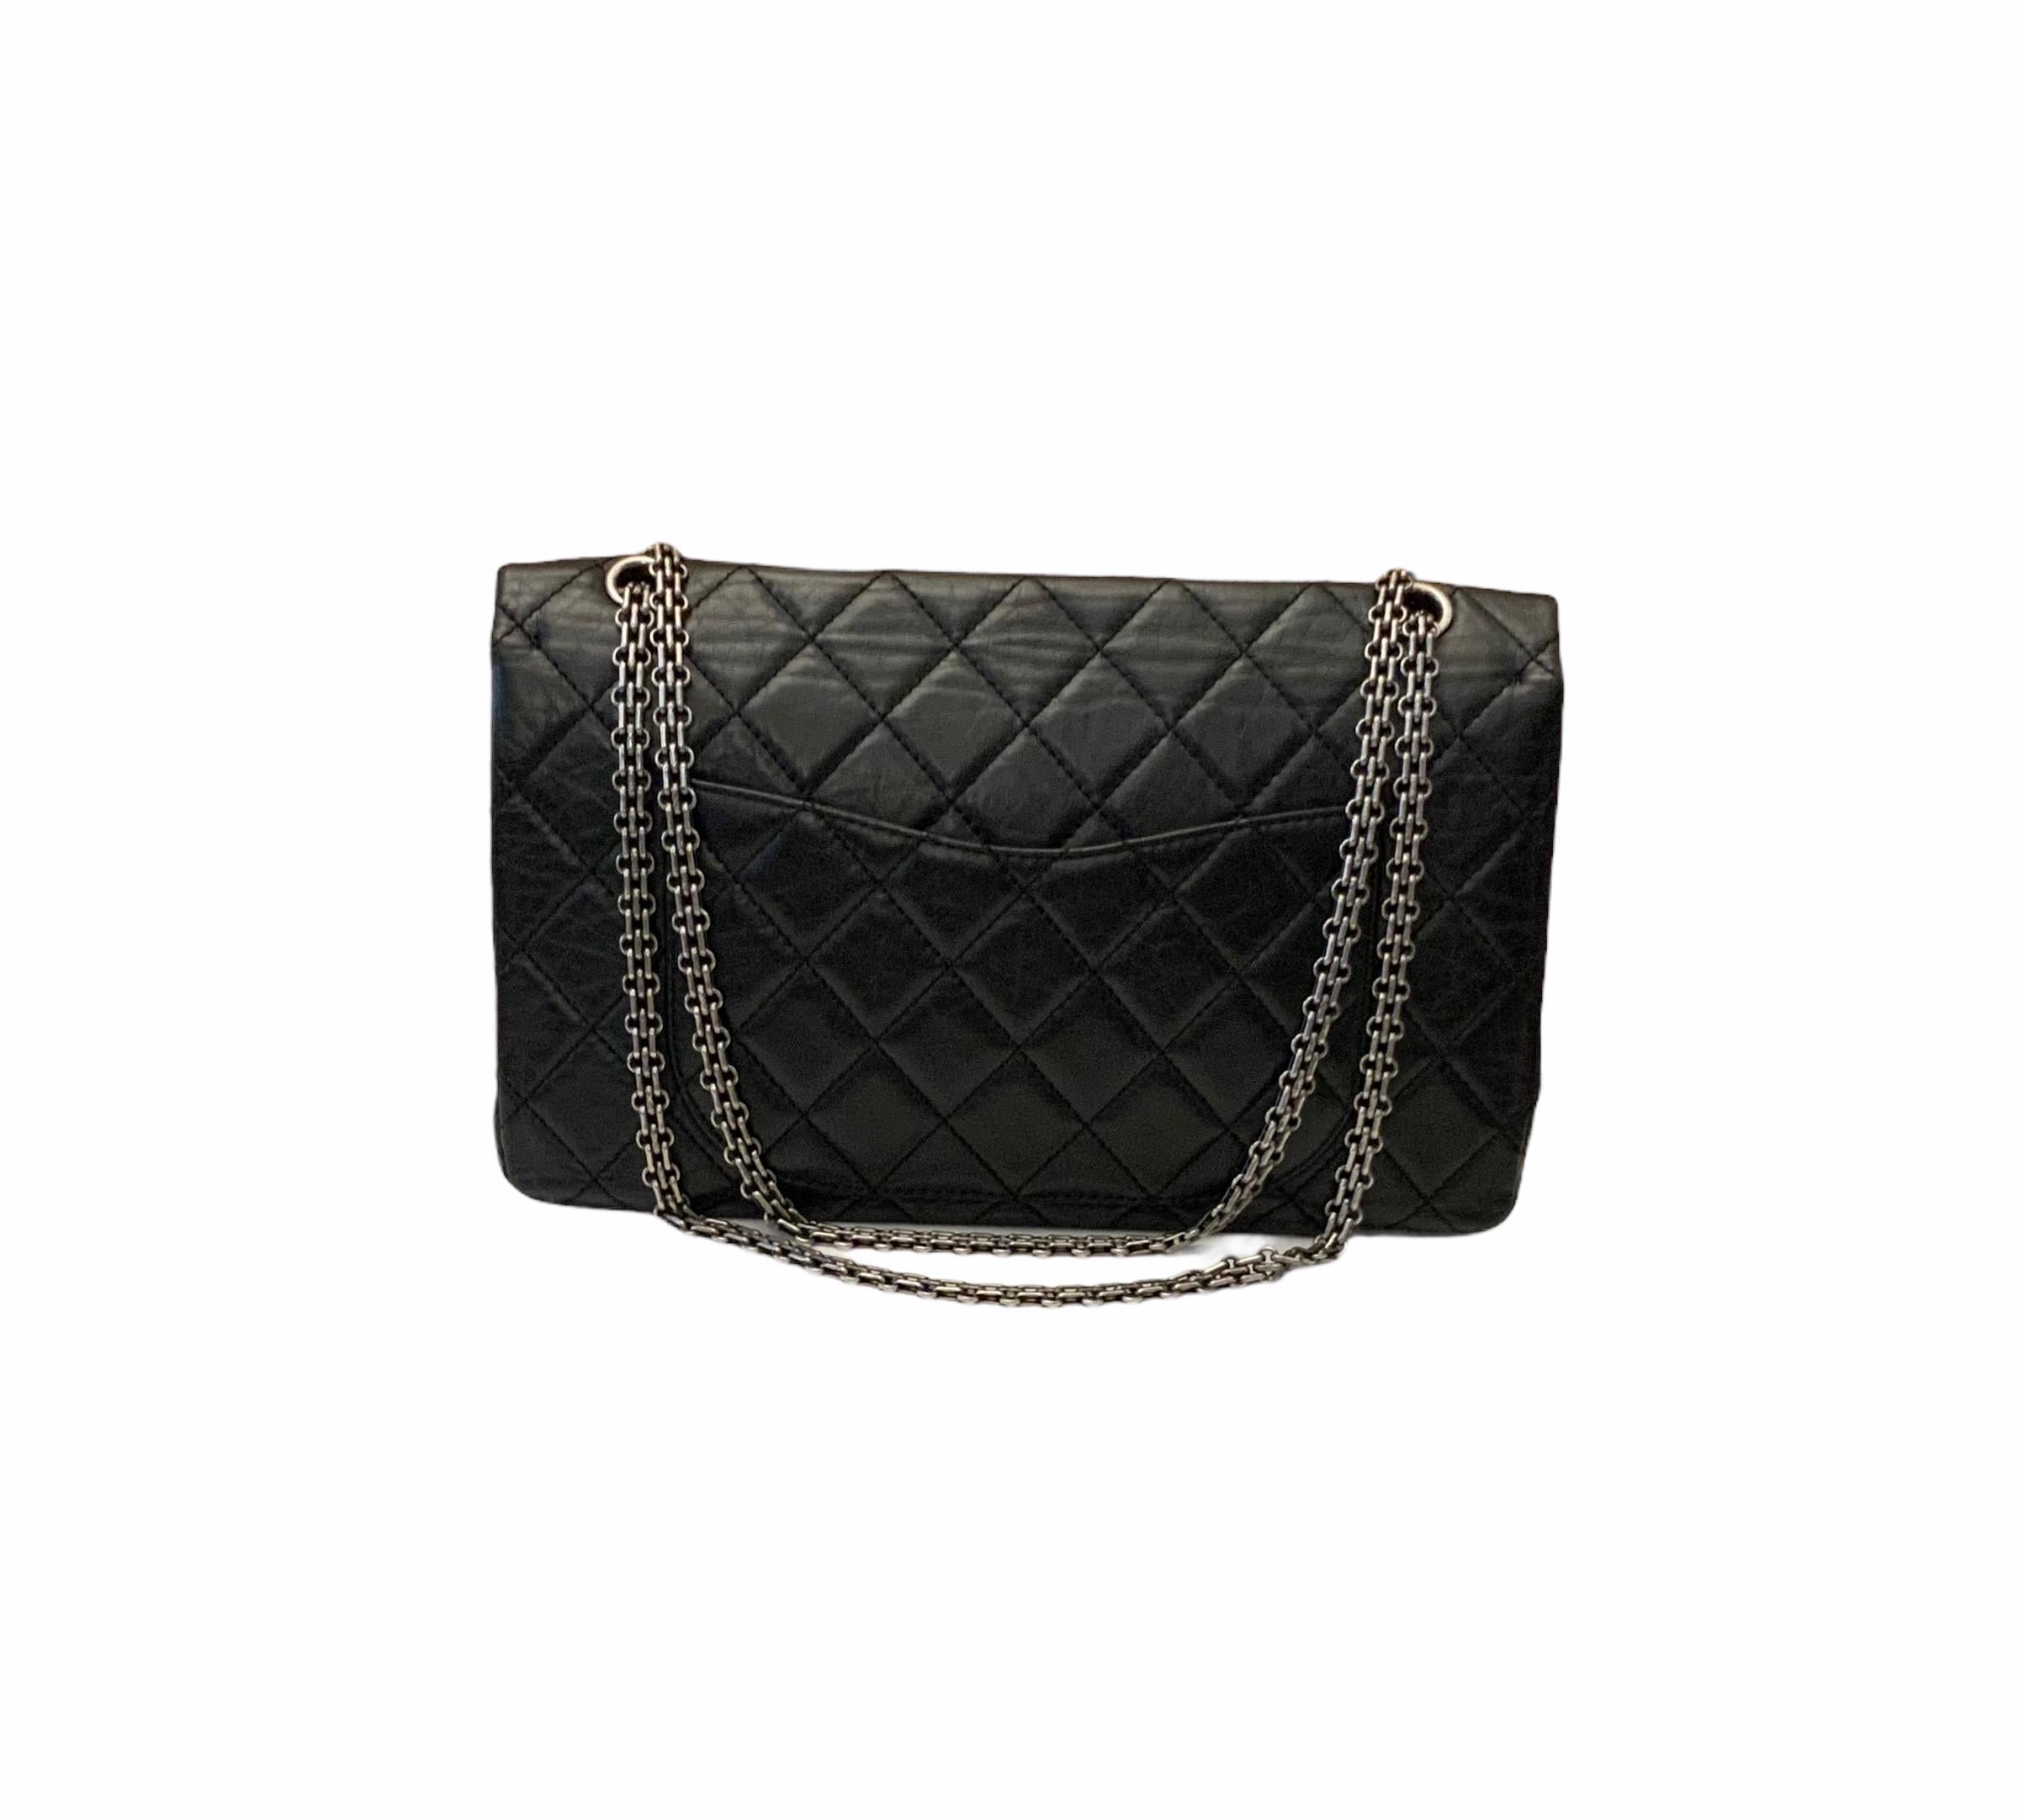 Chanel 2.55 Reissue Black Leather 227 Bag 3